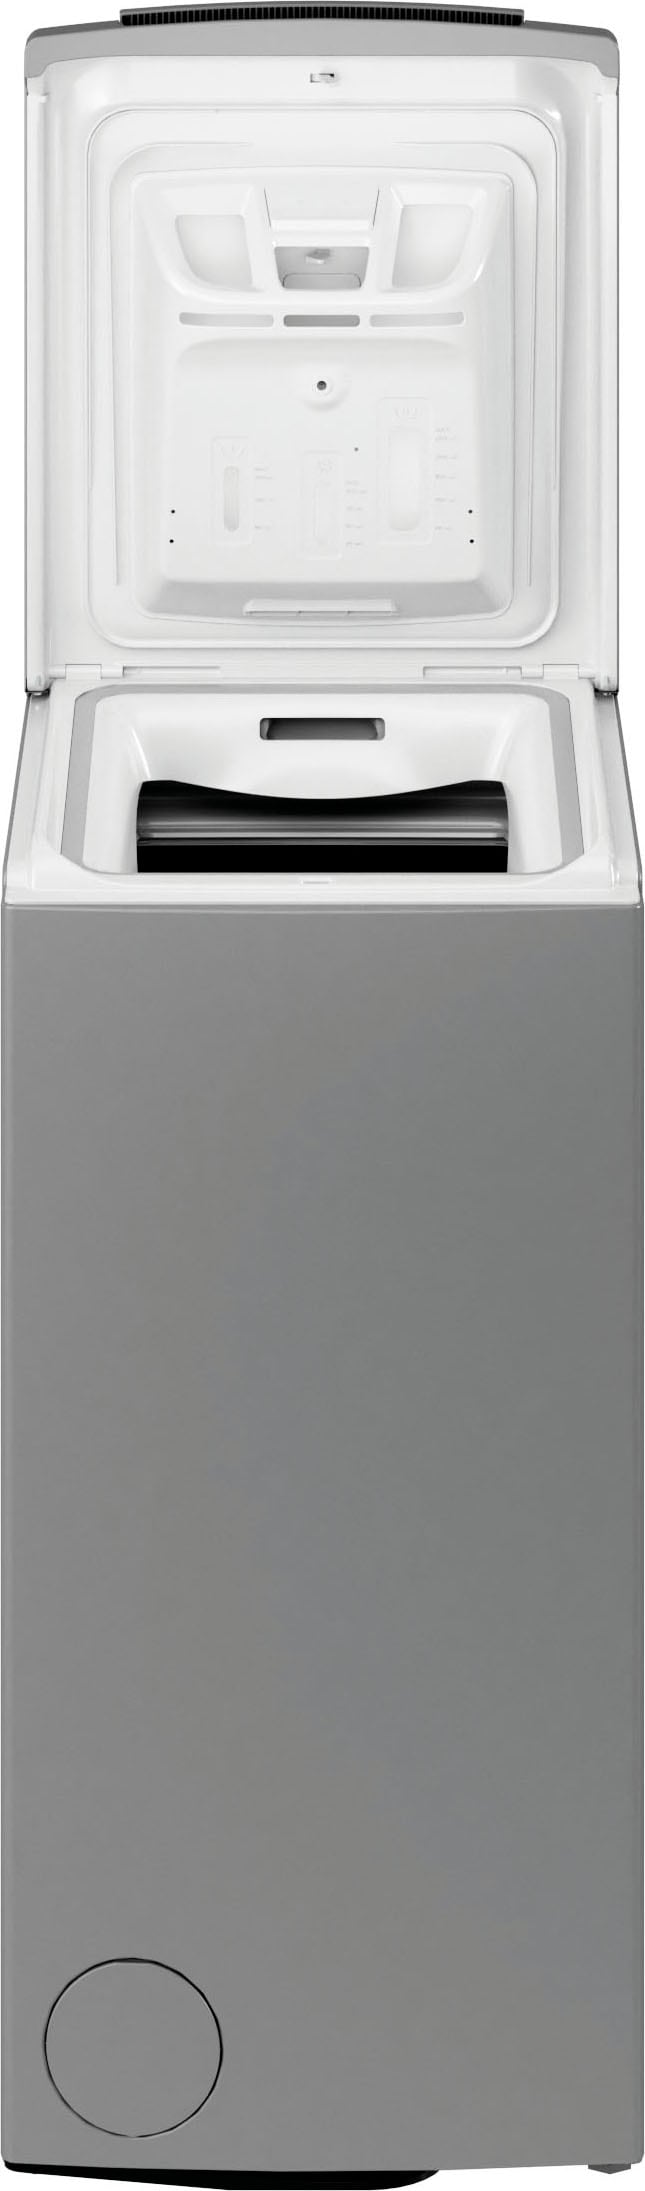 U/ Toplader 6,5 bei kg, D4«, D4, 1300 6513 »WMT min online Waschmaschine BAUKNECHT 6513 WMT